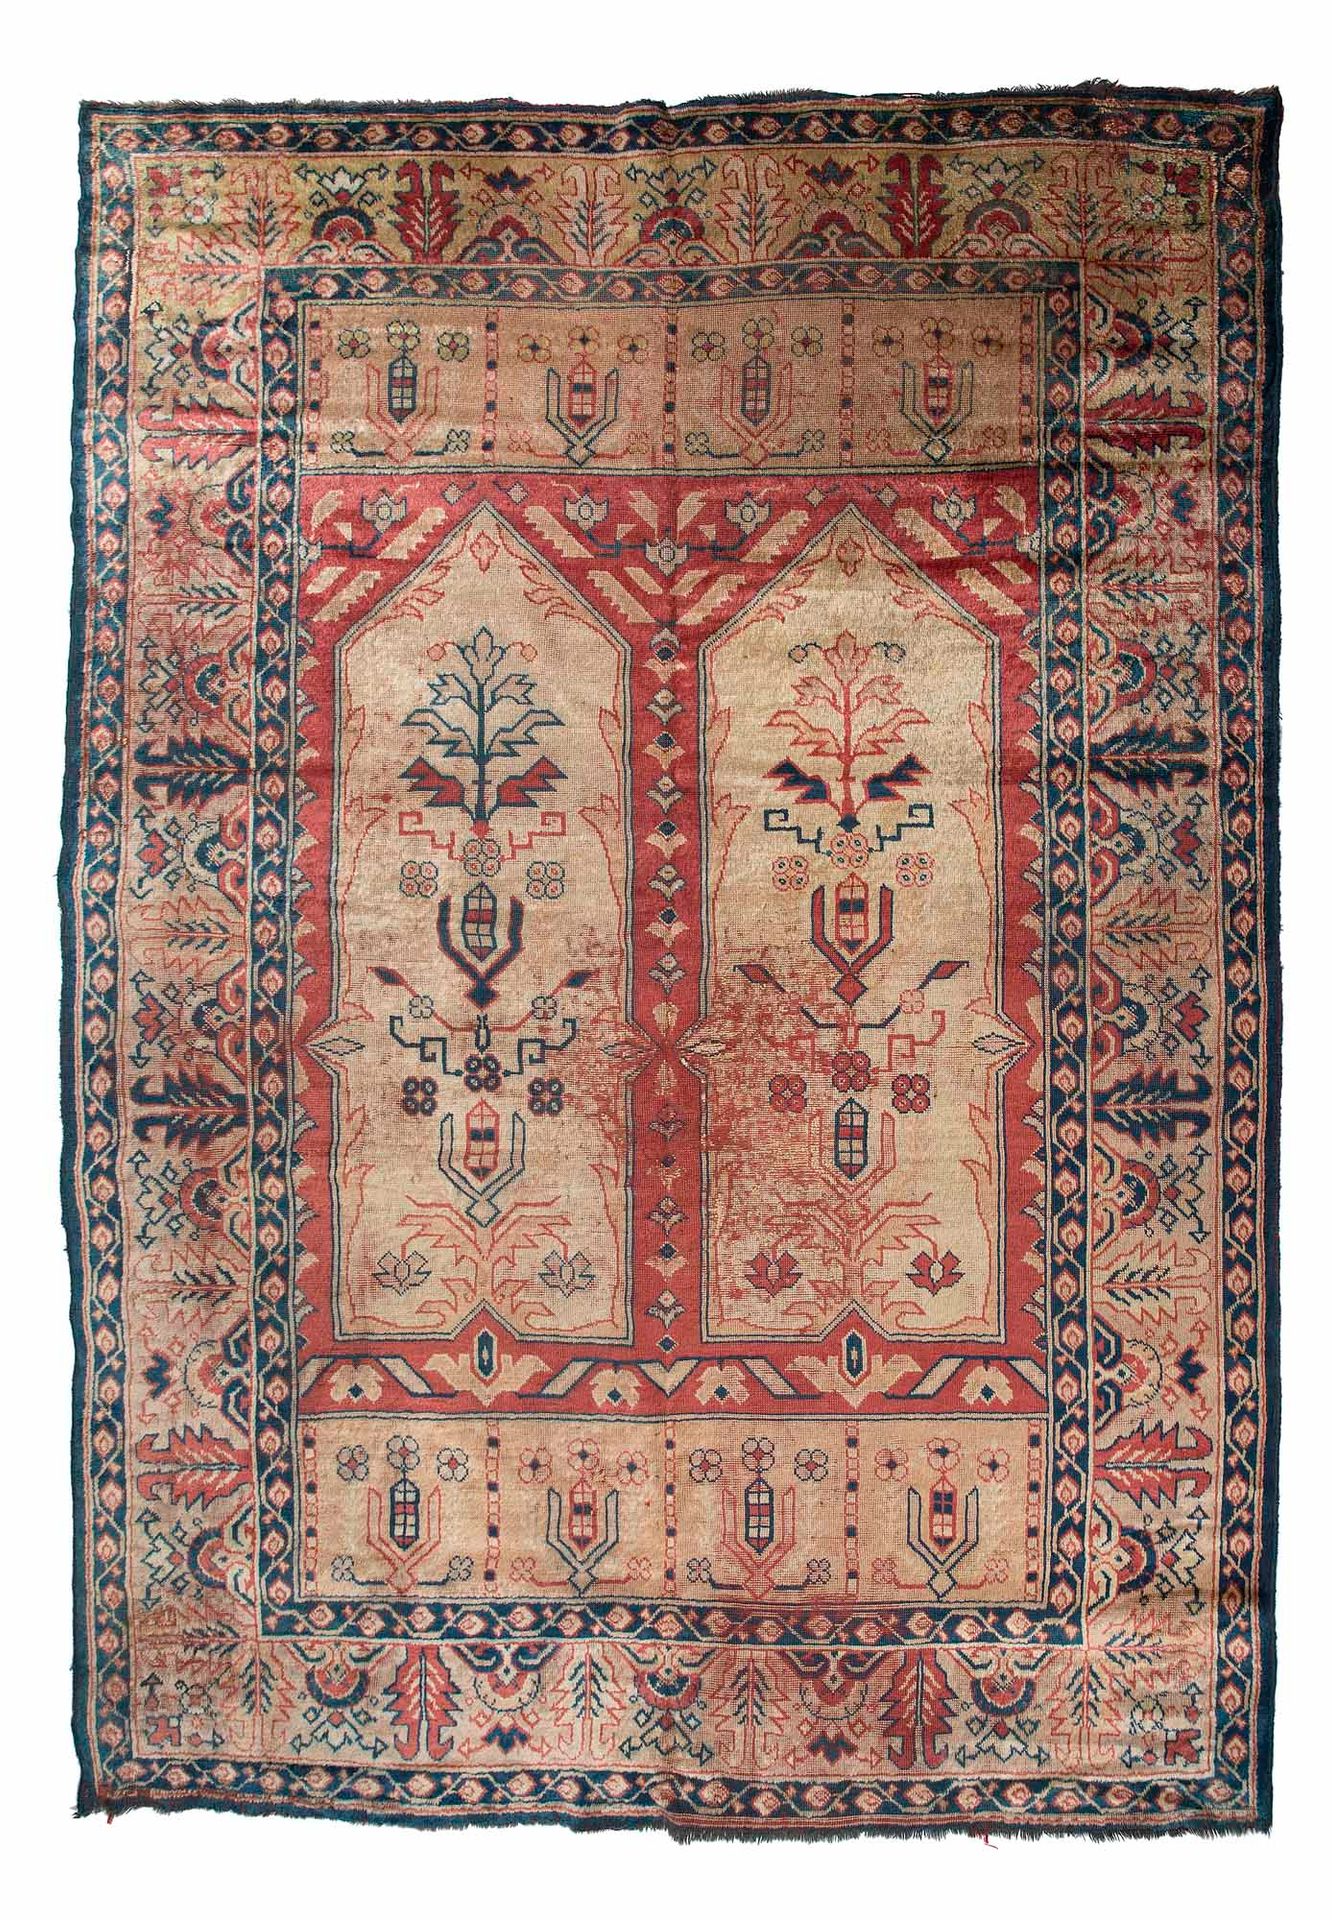 Null Rare TIF-TIK carpet (Asia Minor), late 19th century

Dimensions : 335 x 225&hellip;